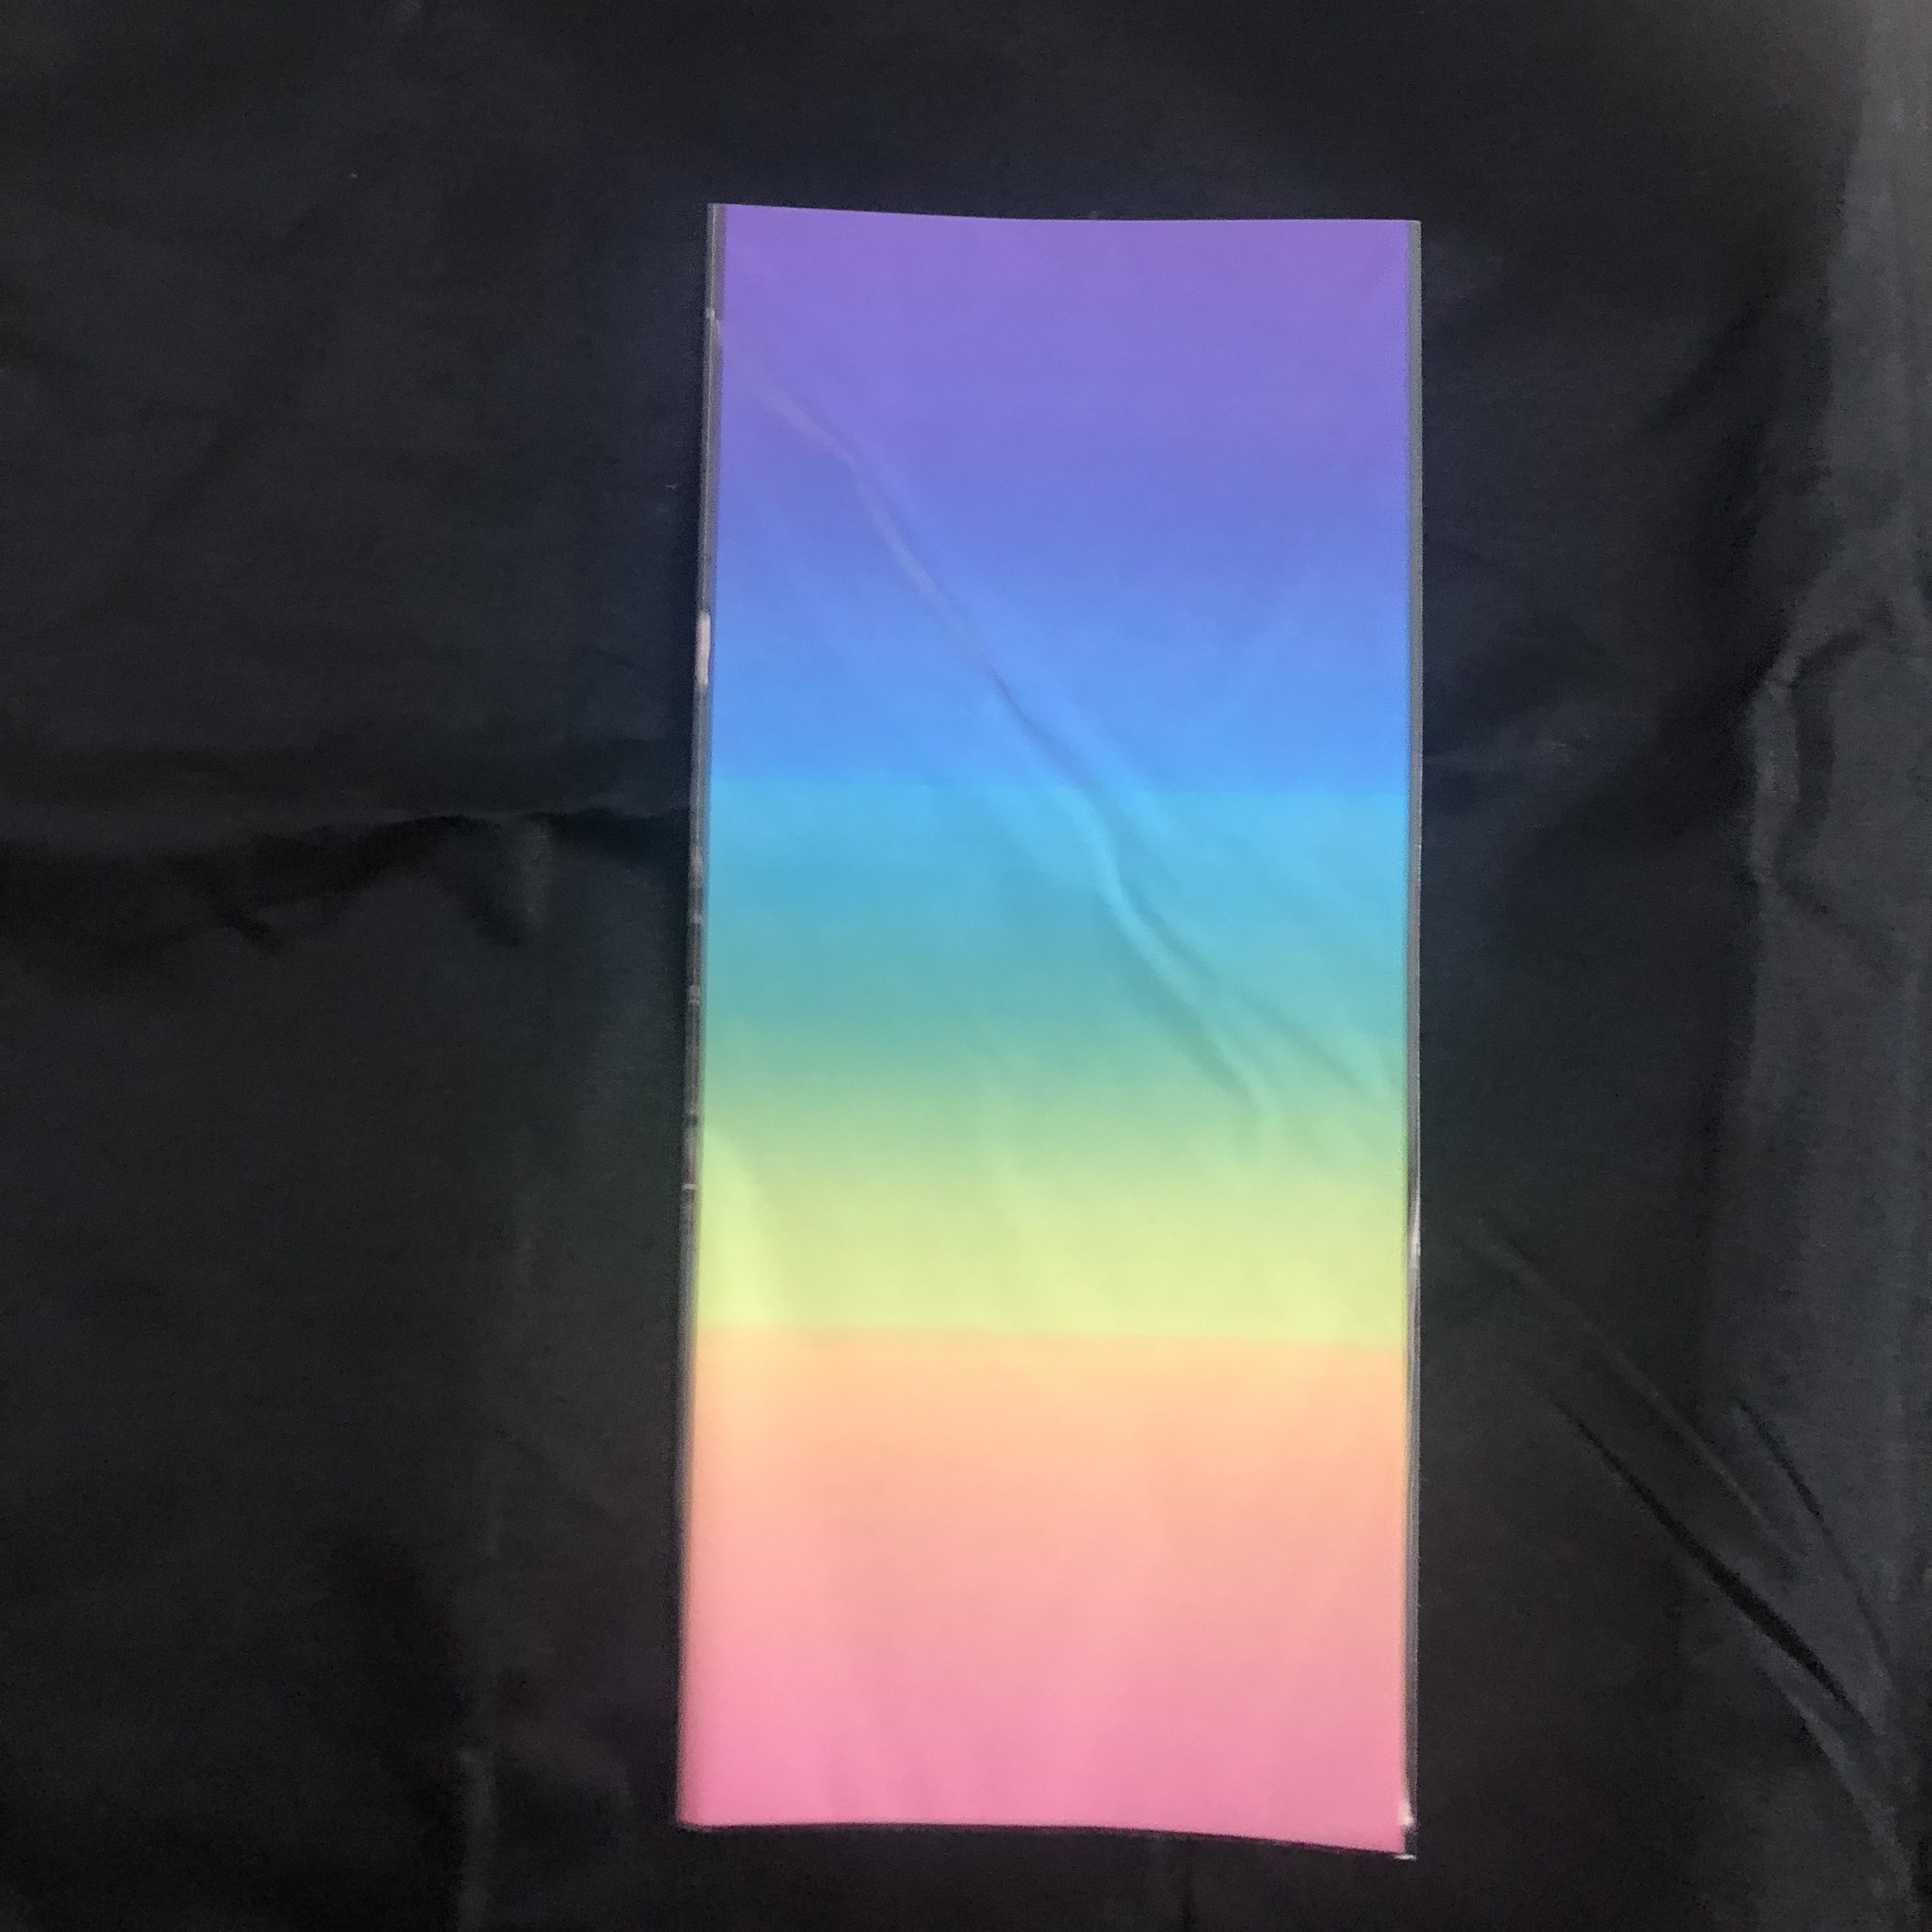 rainbow bacon t-shirt - Roblox